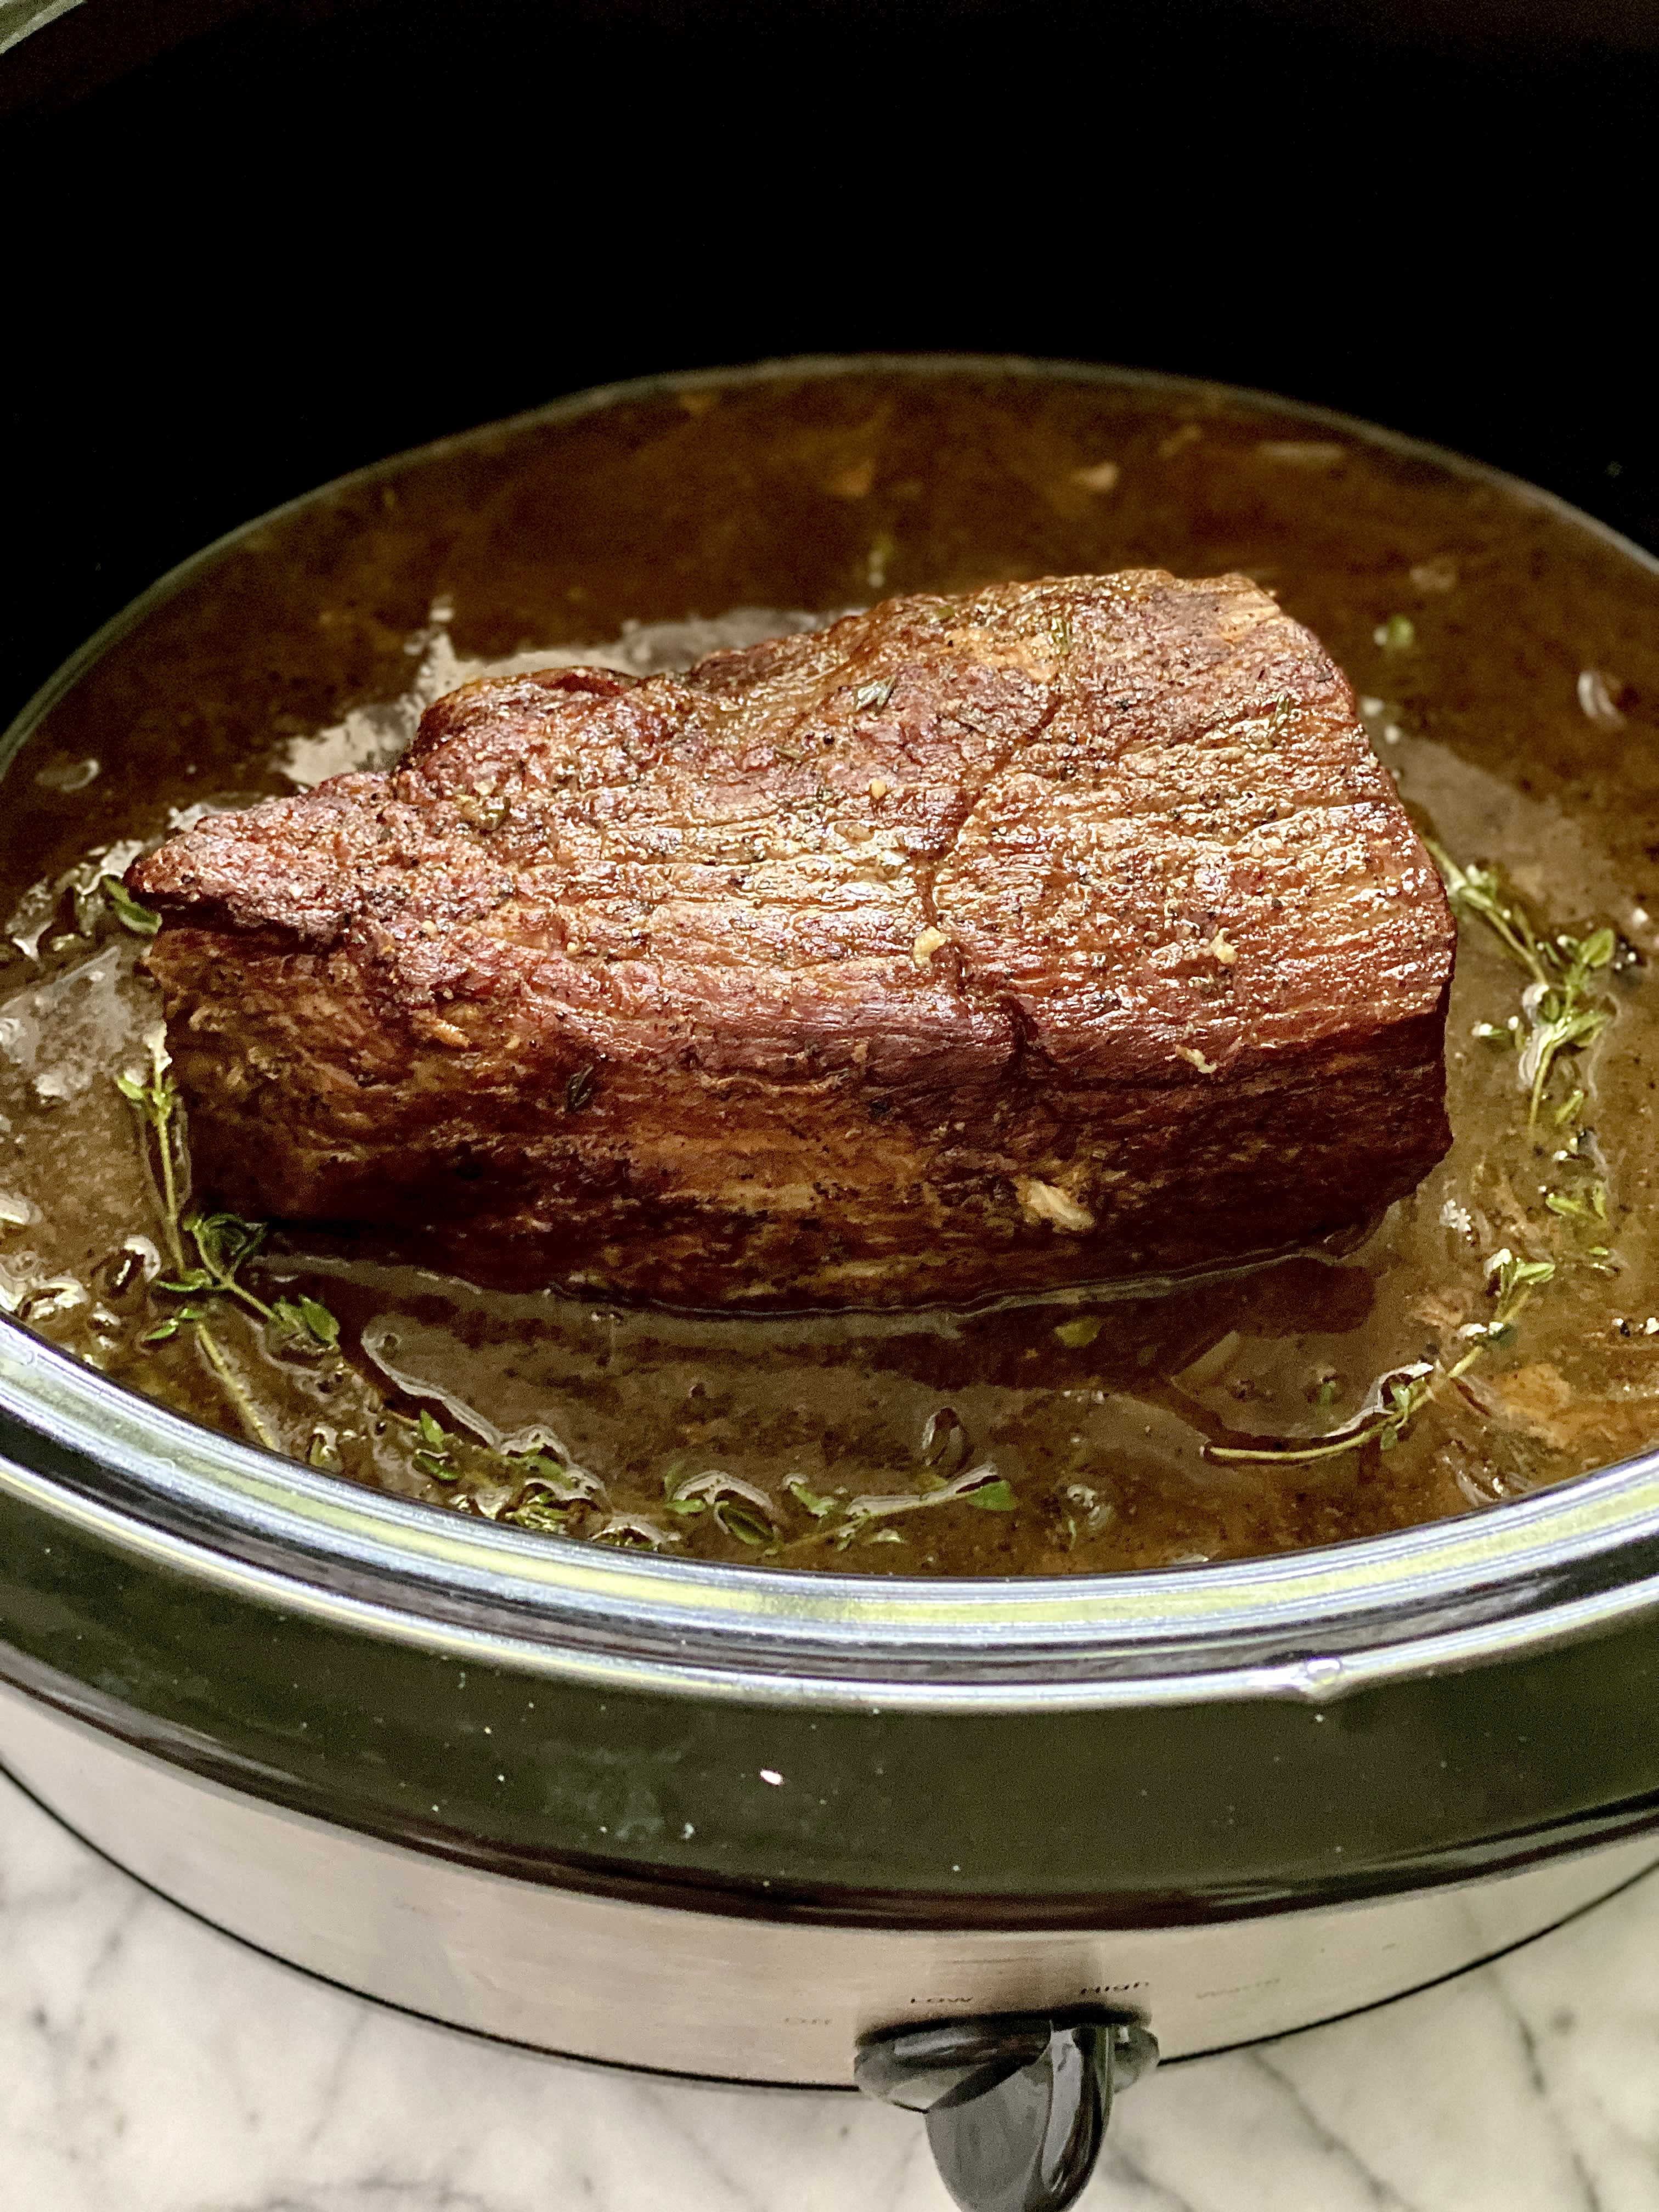 https://cdn.apartmenttherapy.info/image/upload/v1663337944/k/Edit/2022-11-Slow-Cooker-Roast-Beef/slow-cooker-roast-beef-1.jpg